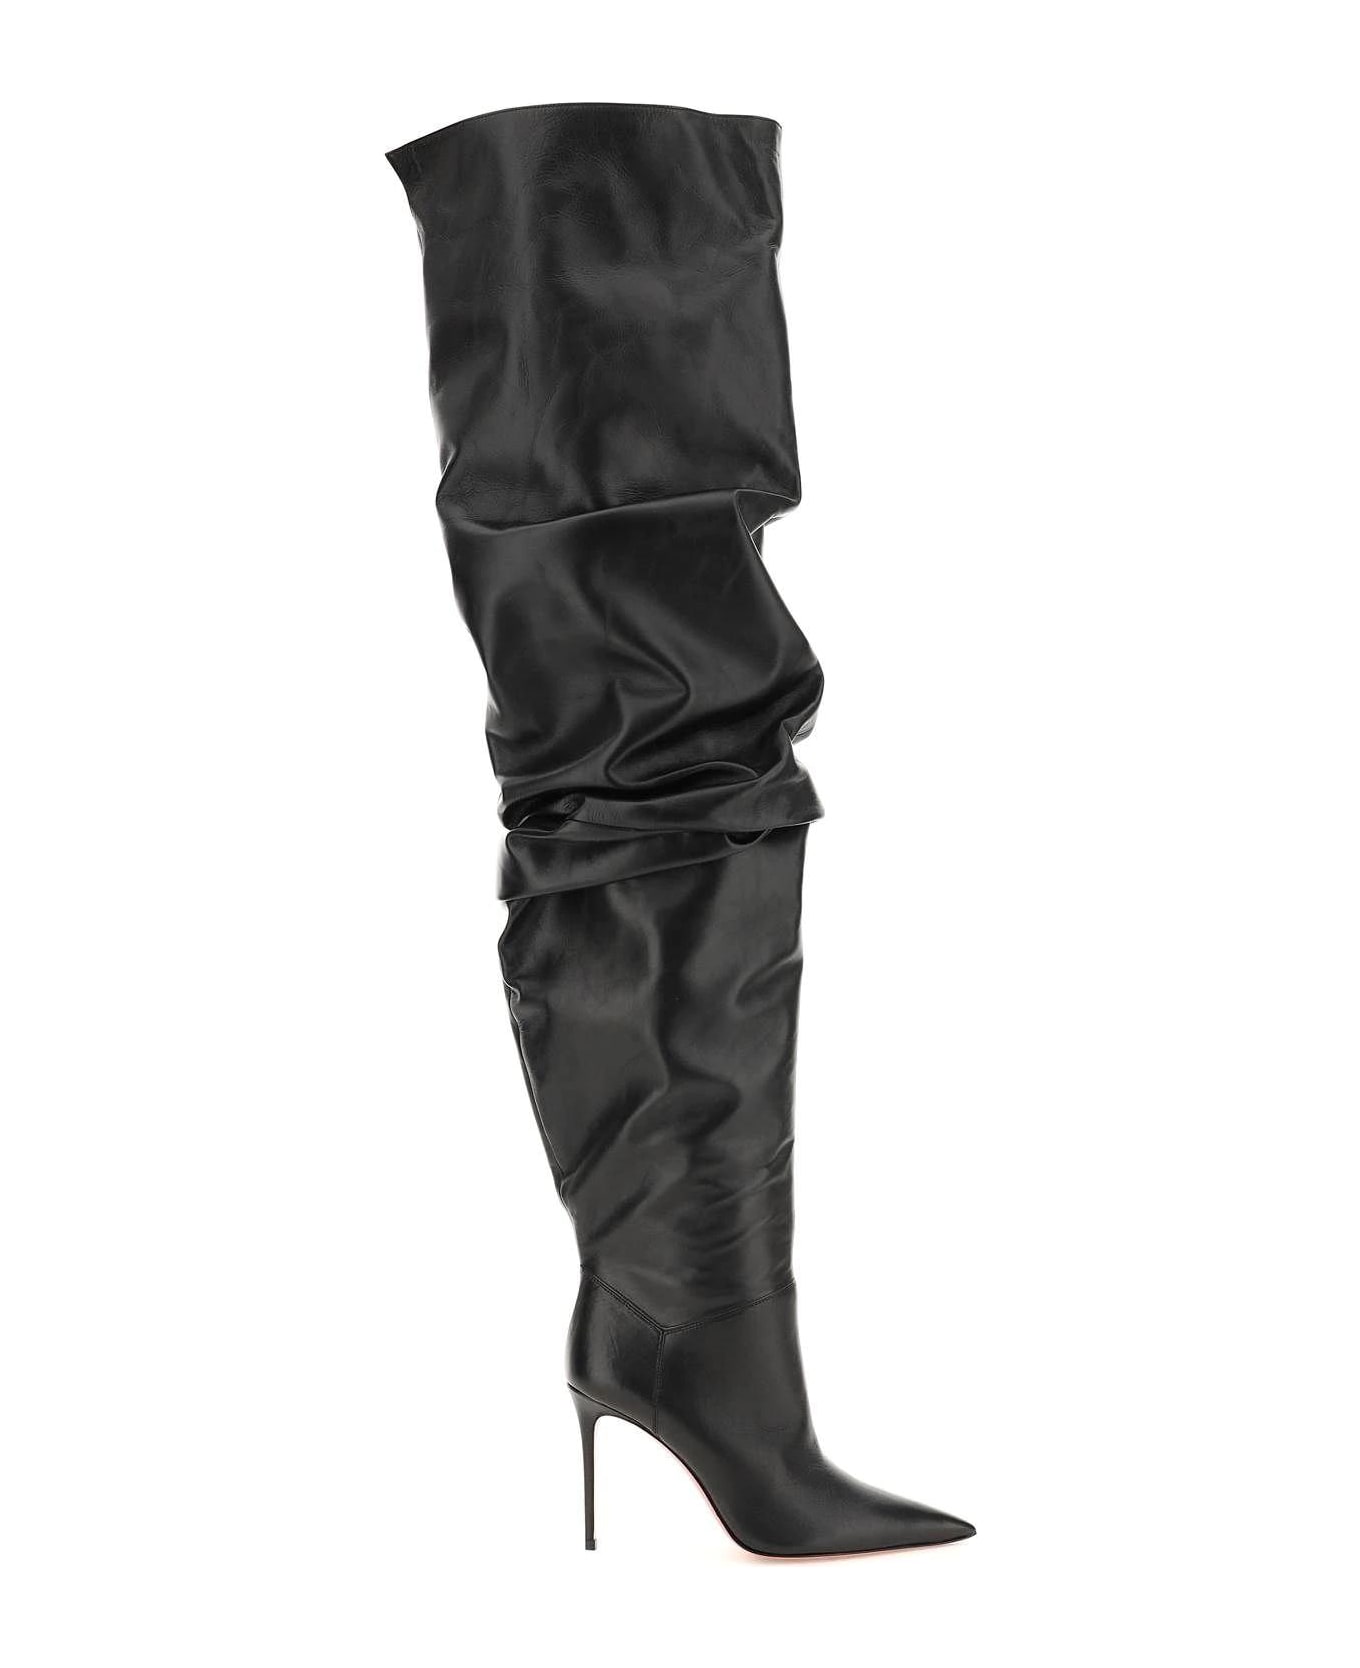 Amina Muaddi Jahleel Thigh-high Boots - Black ブーツ